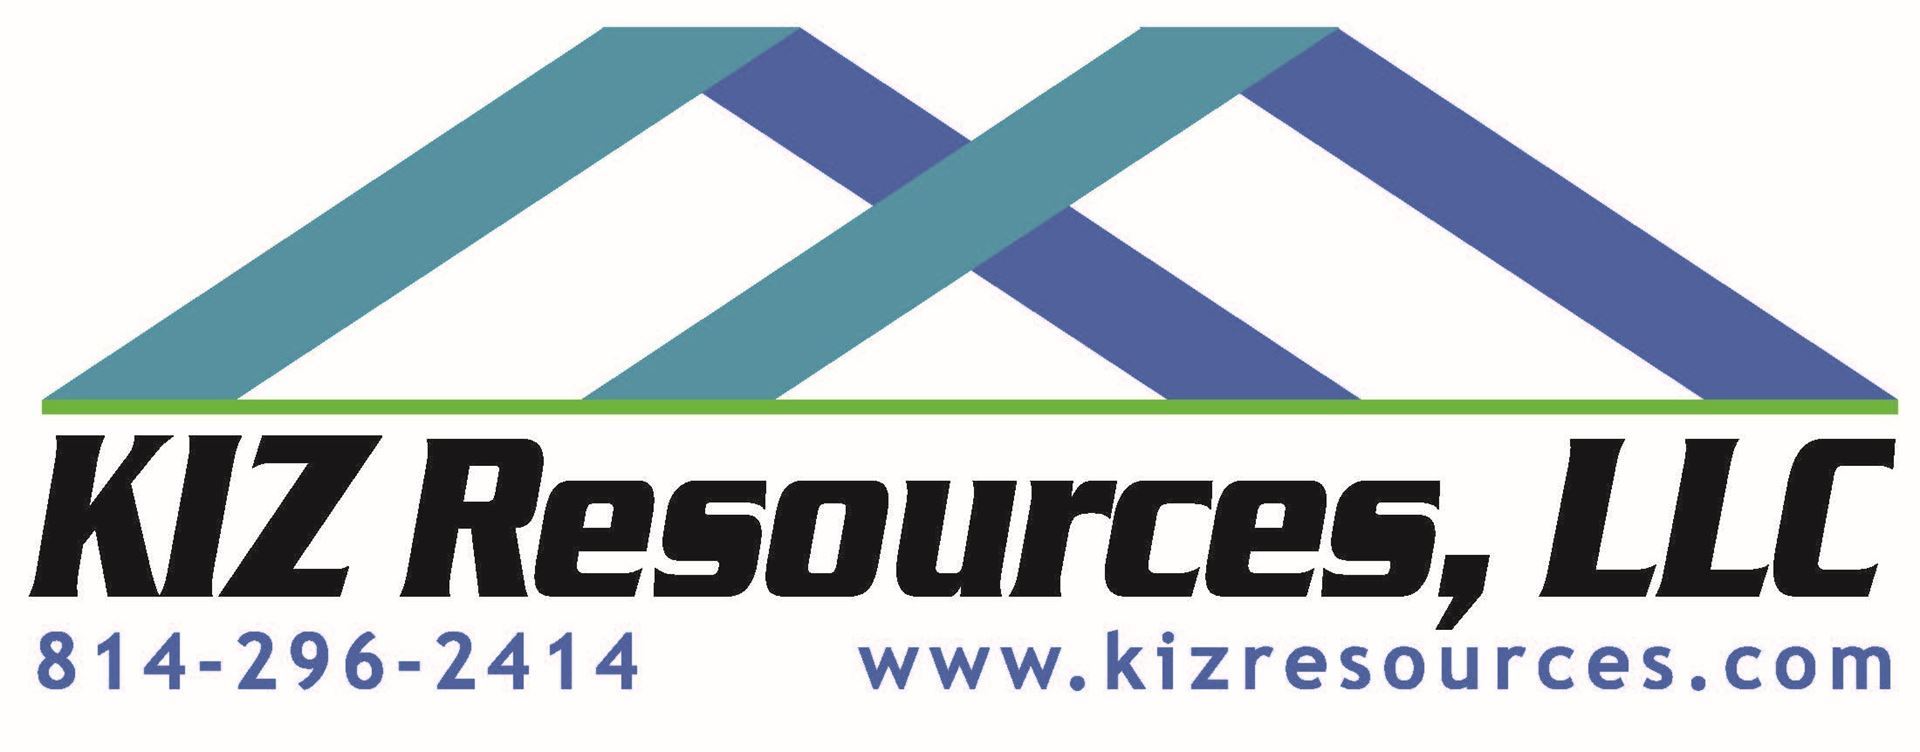 KIZ Resources, LLC logo